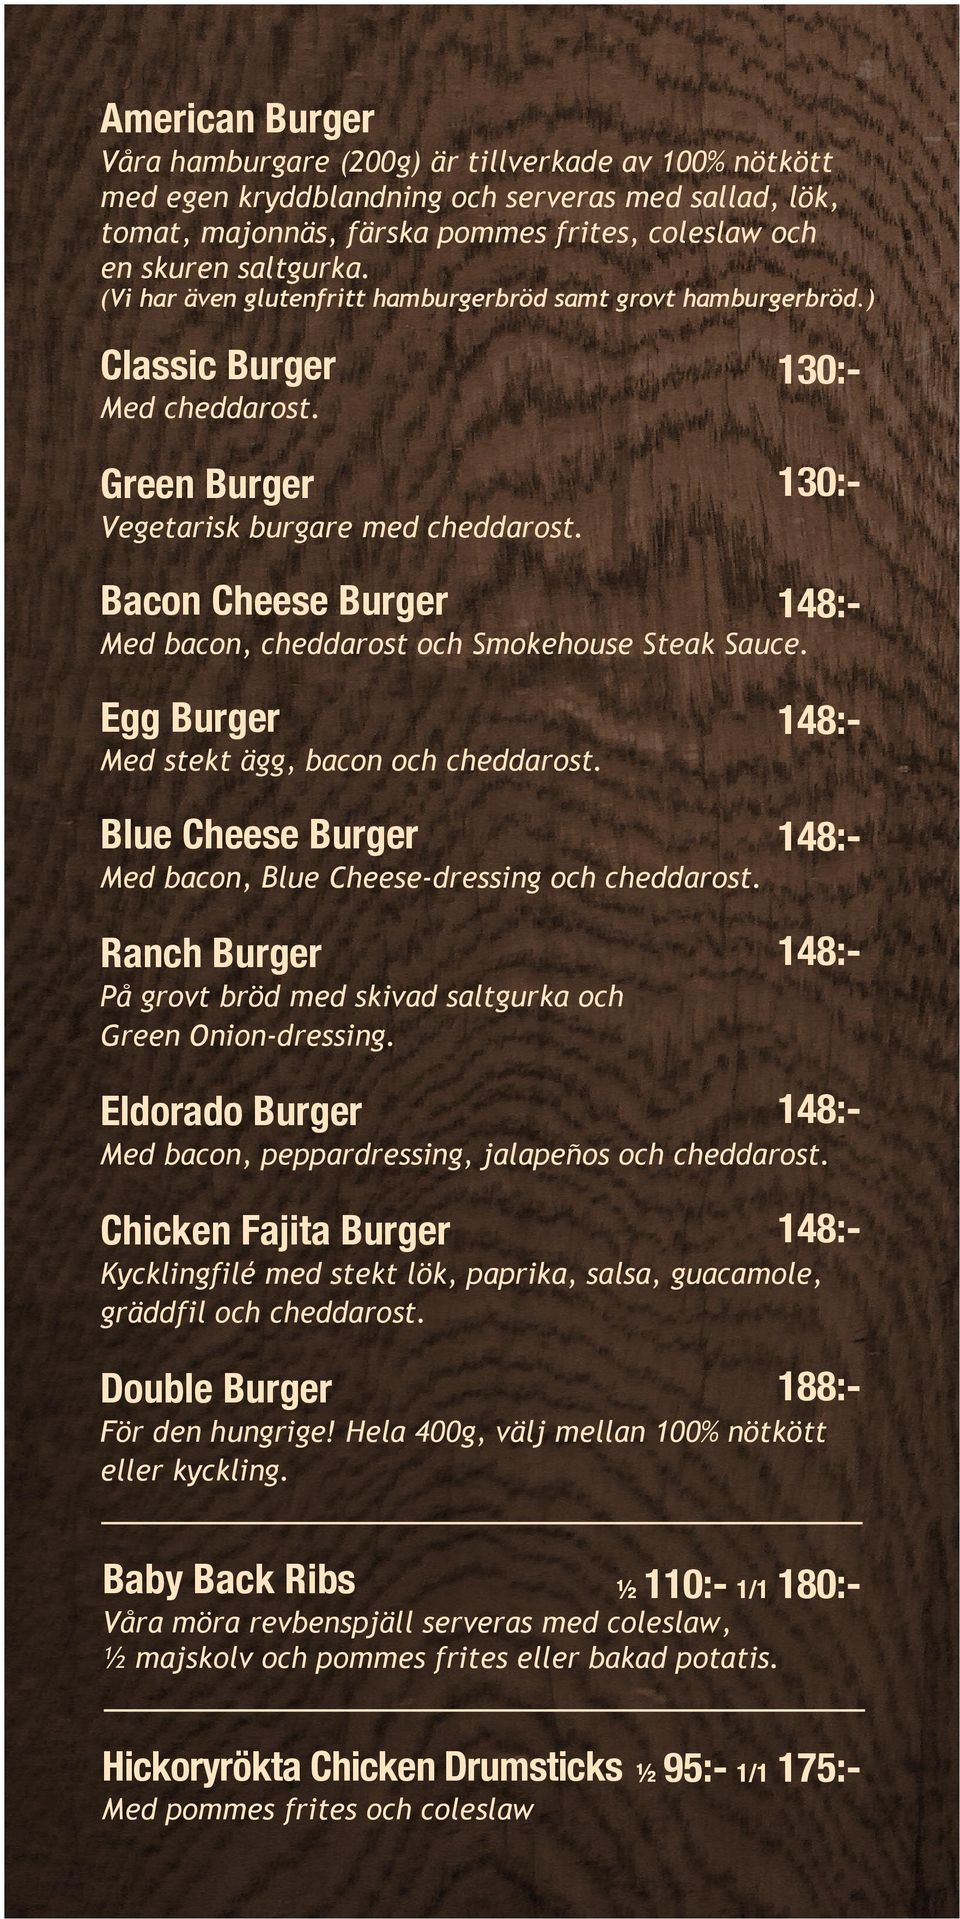 ) Classic Burger 130:- Green Burger 130:- Bacon Cheese Burger Egg Burger Blue Cheese Burger Ranch Burger Eldorado Burger Chicken Fajita Burger Double Burger 188:- Med cheddarost.